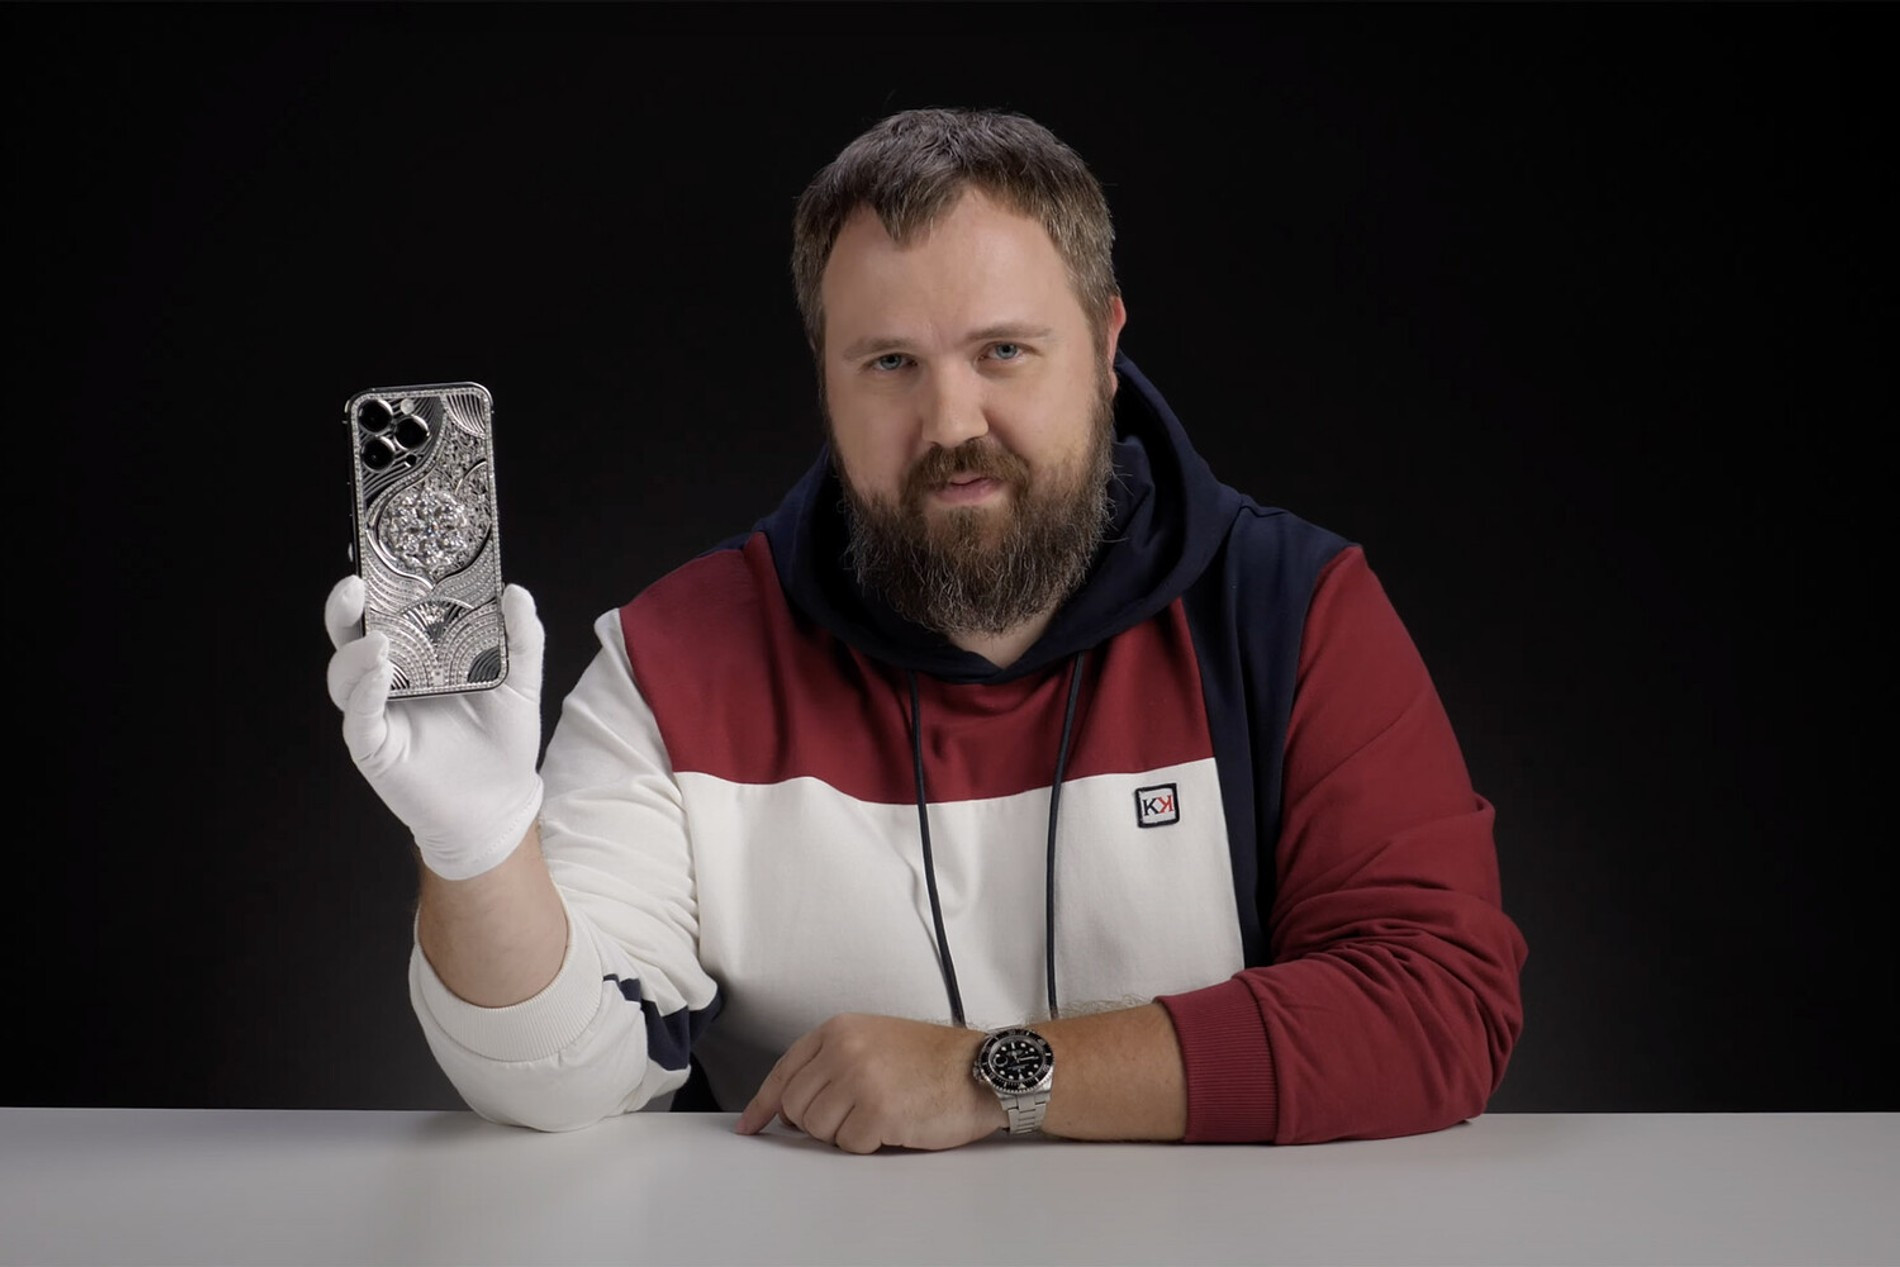 Блогер Валентин «Wylsacom» Петухов показал самый дорогой iPhone 14 Pro Max за 40 млн рублей
Фото: YouTube